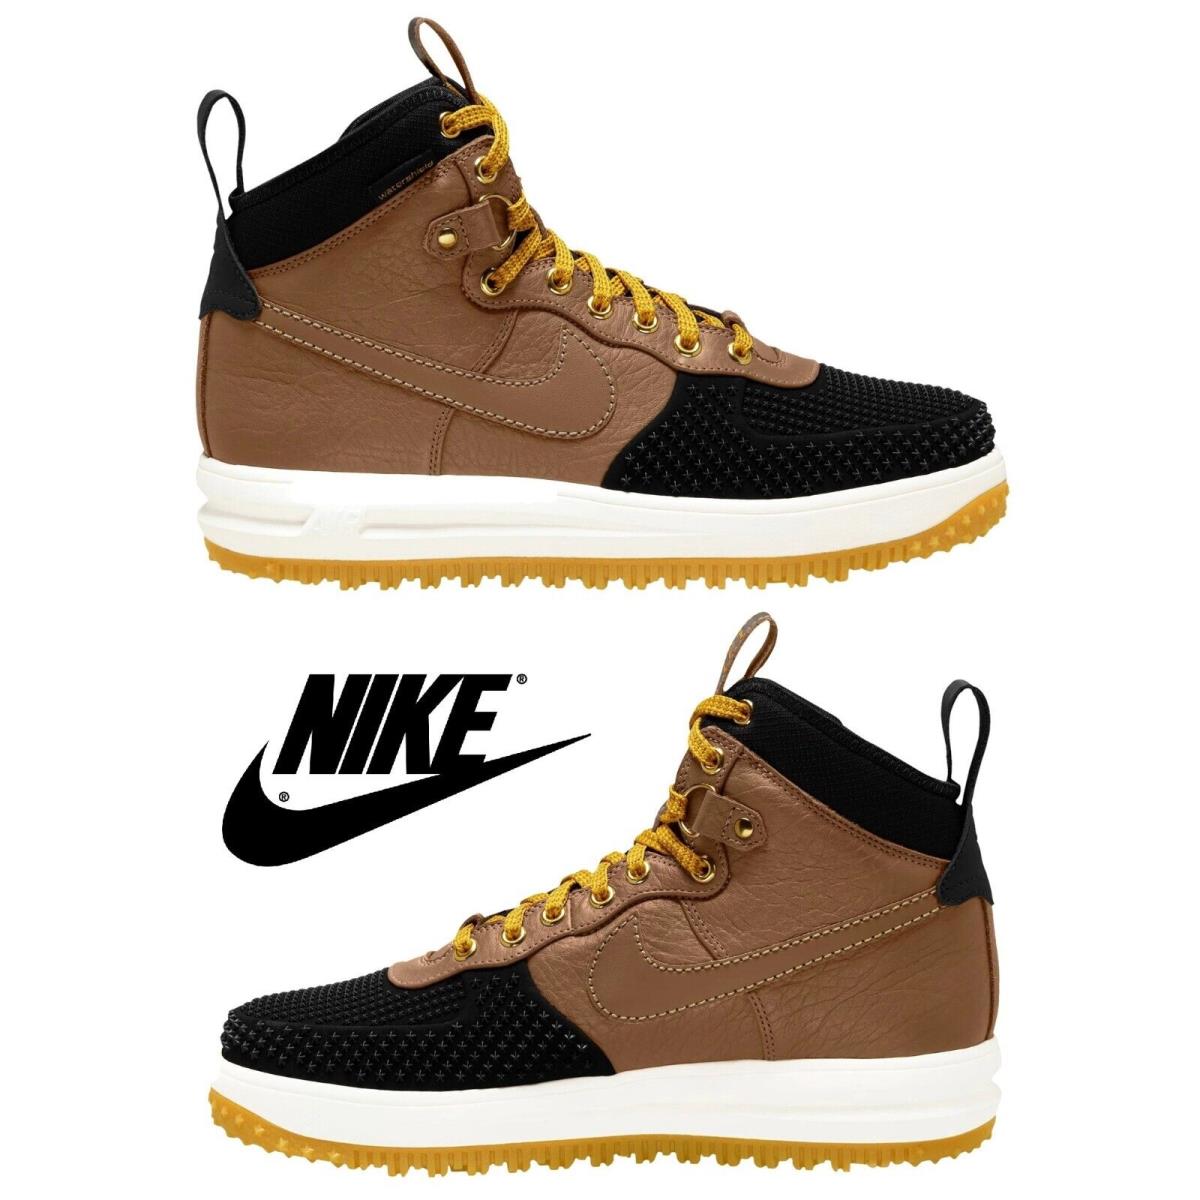 Nike Lunar Force 1 Duckboot Men`s Boots Hiking Water-resistant Shoes Brown Black - Brown, Manufacturer: Brown/Black/Gold